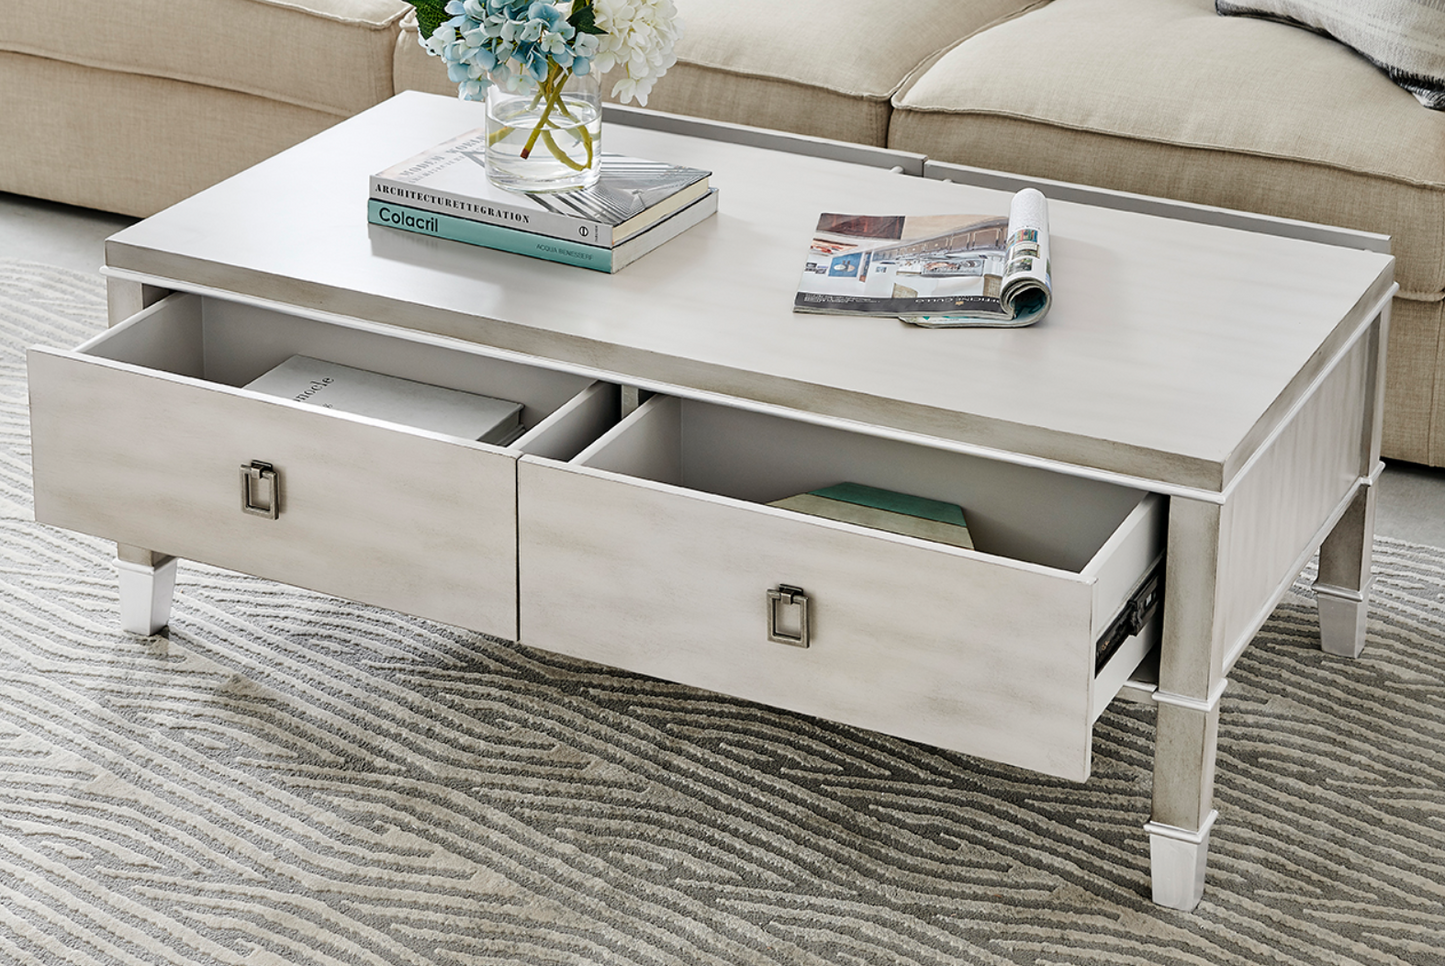 Carter Luxury Coffee Table 4 Drawer - Luxury Interiors